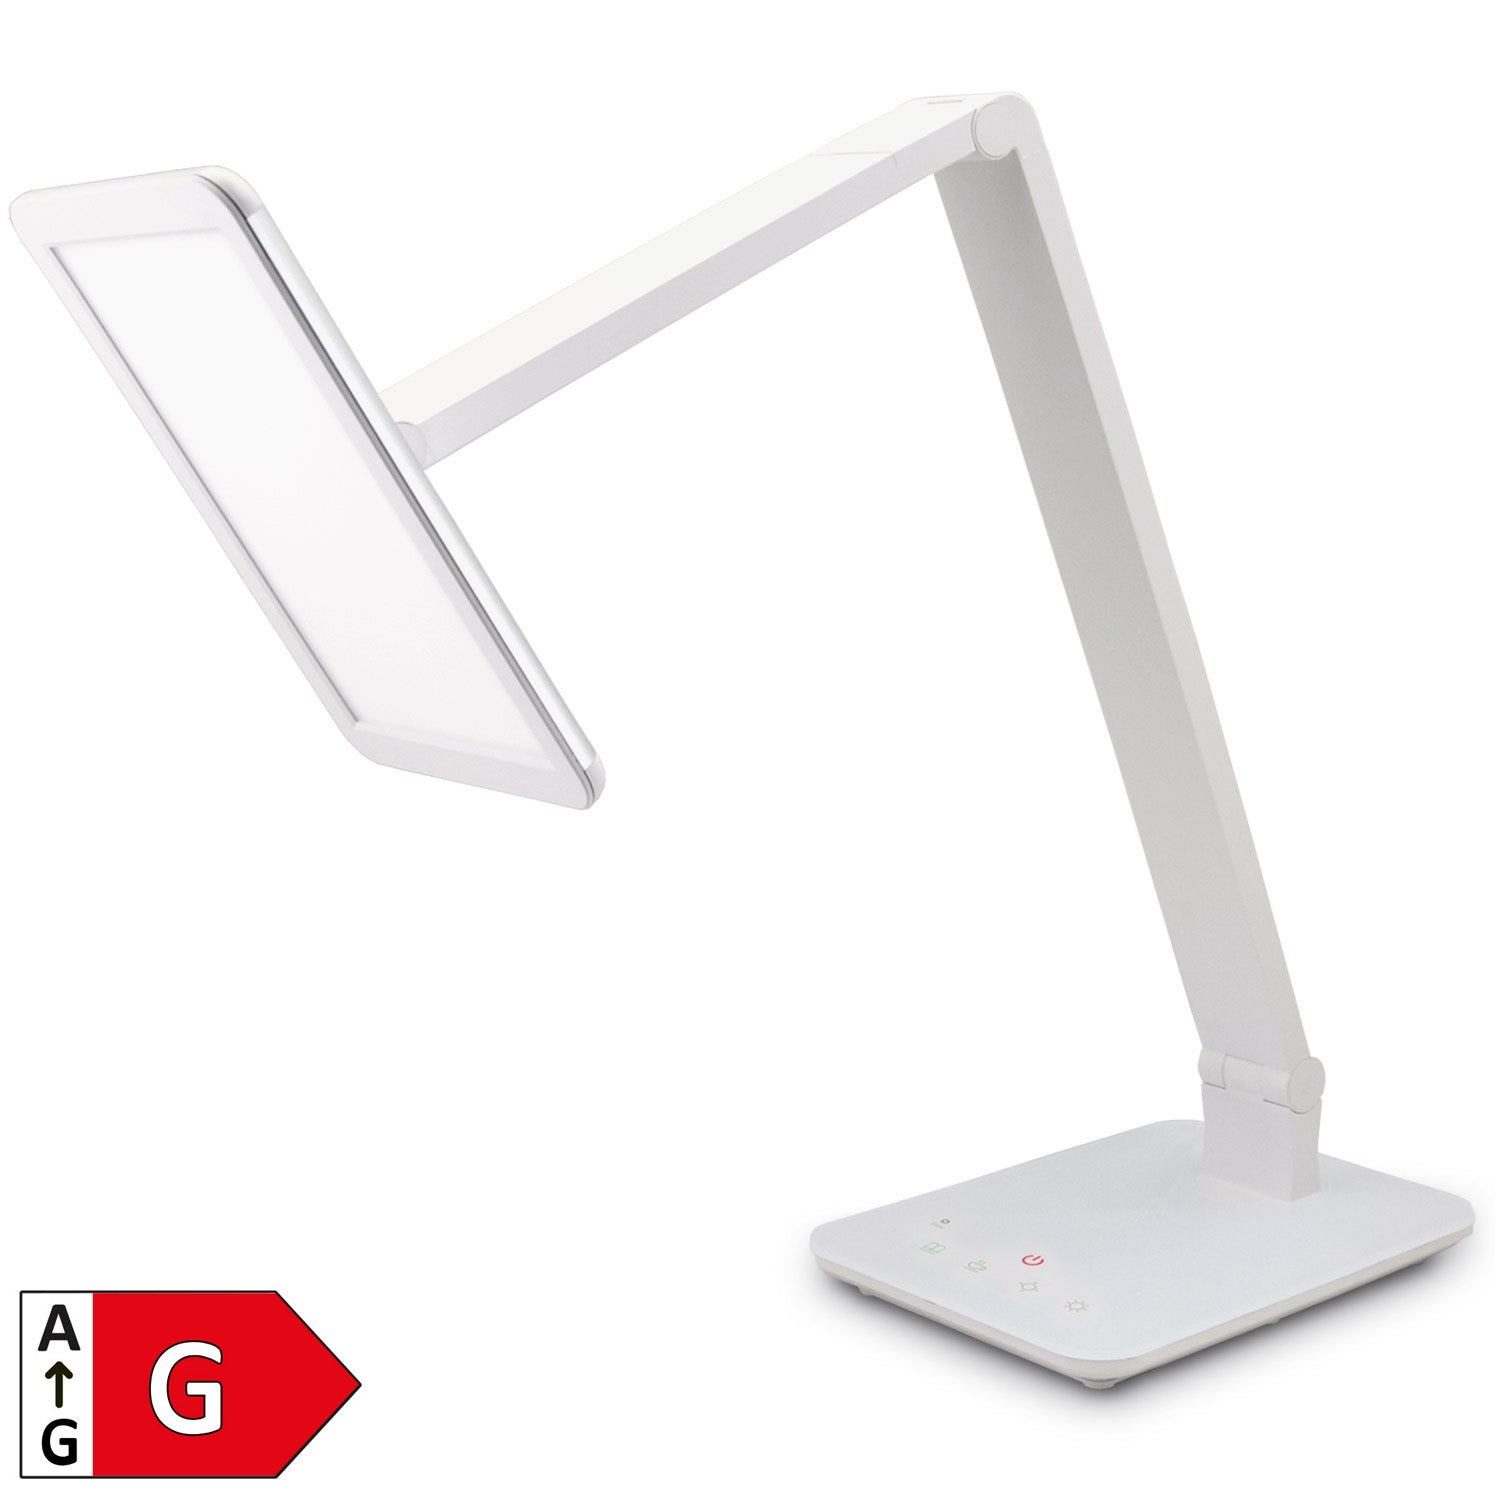 Desk LED Area Illuminated with FeinTech - LTL00100 Light and Large USB